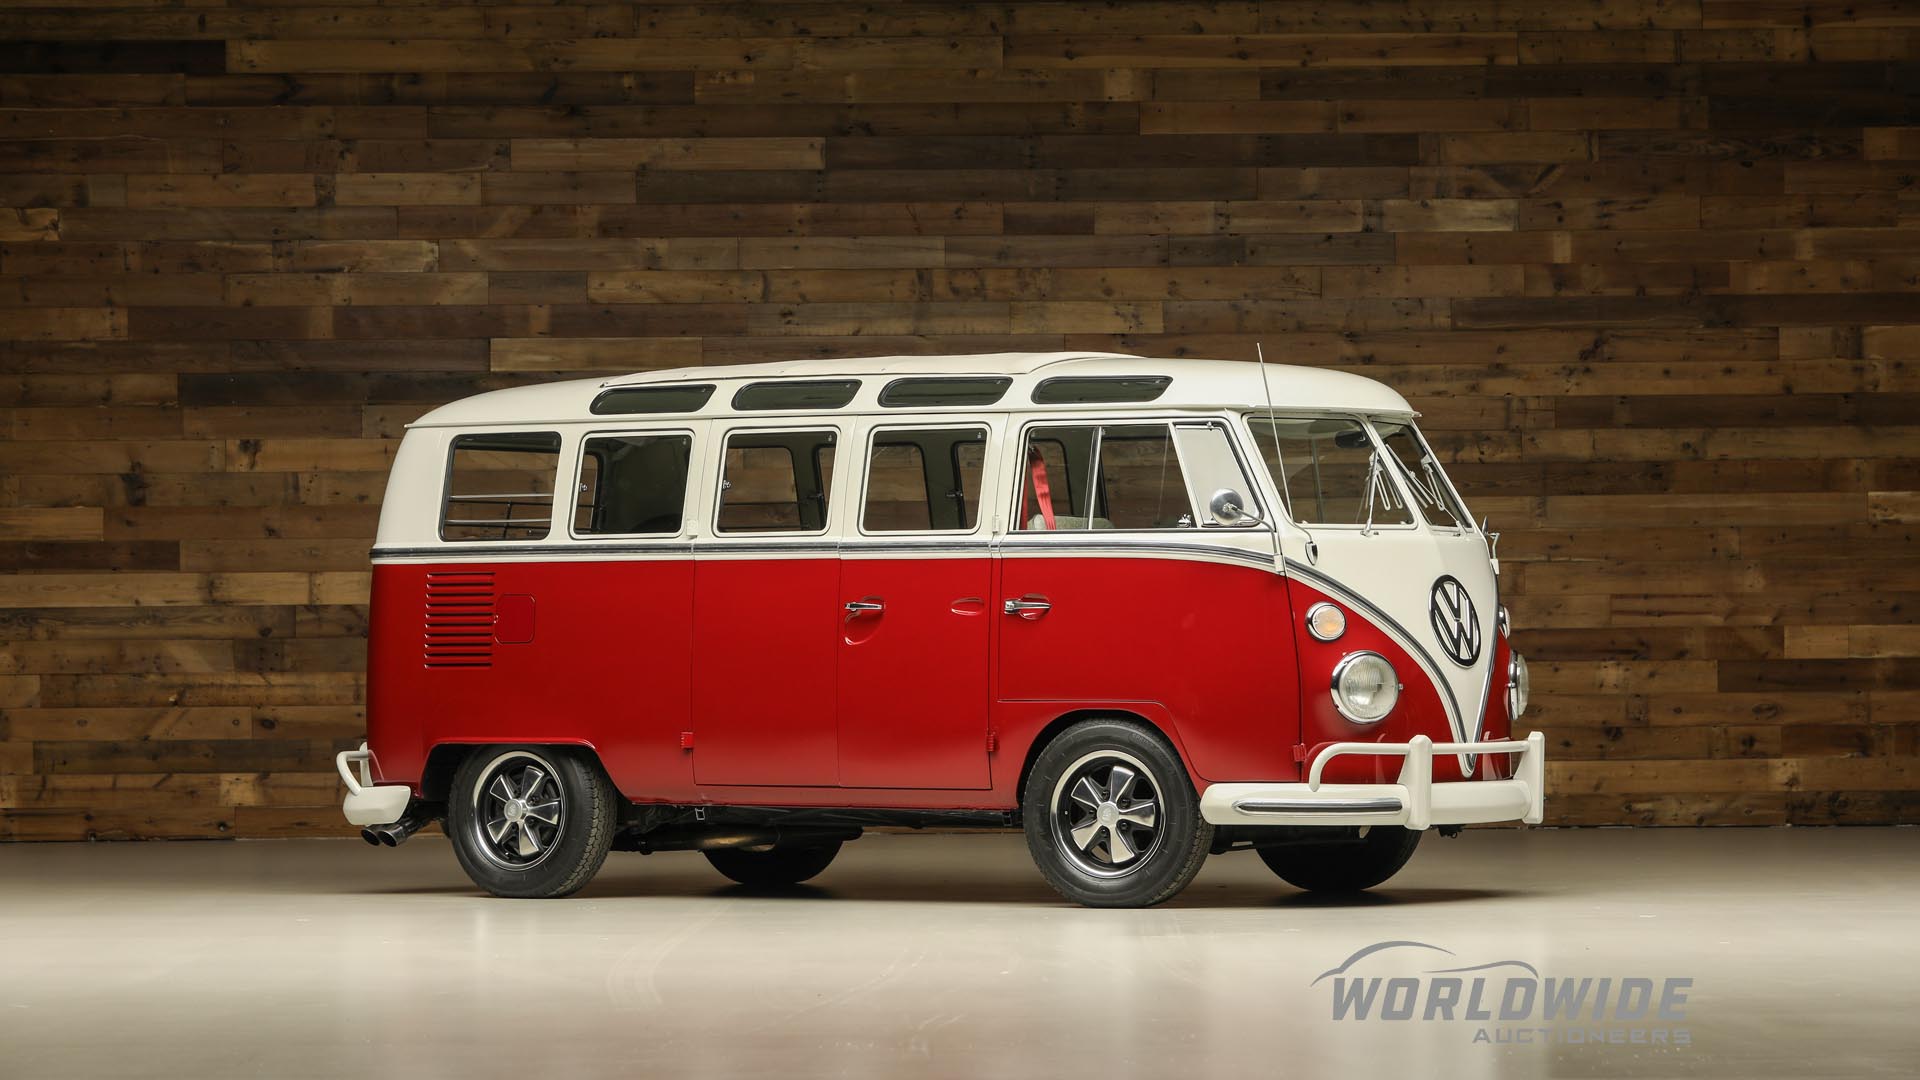 1967 Volkswagen Deluxe Samba 21-Window 'Outlaw' Microbus